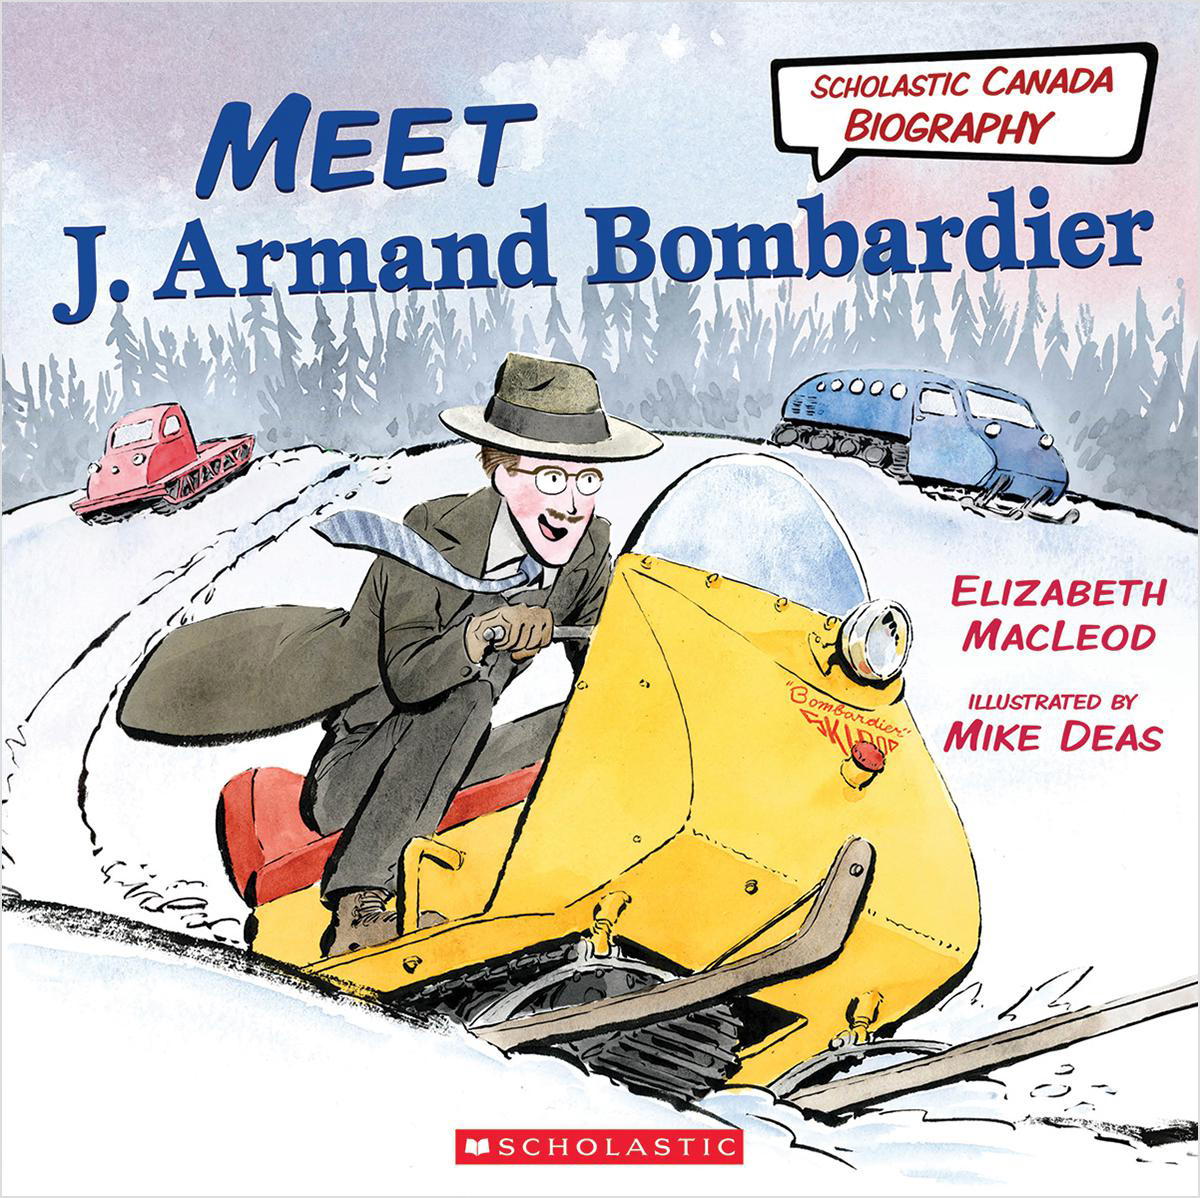  Scholastic Canada Biography: Meet J. Armand Bombardier 